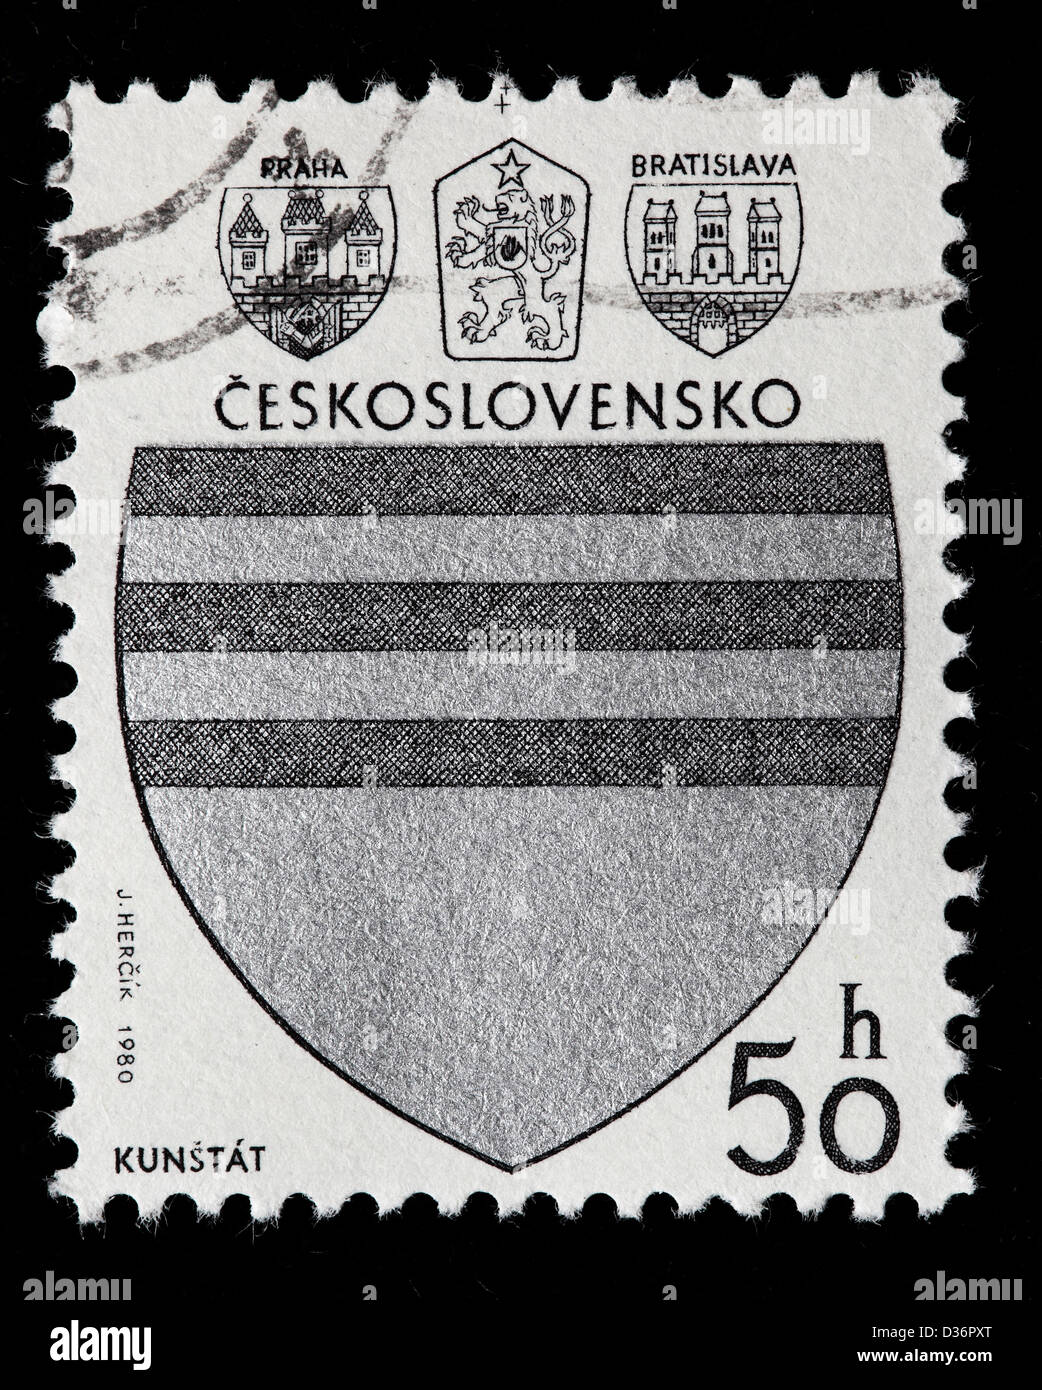 Kunstat, coat of arms, postage stamp, Czechoslovakia, 1980 Stock Photo